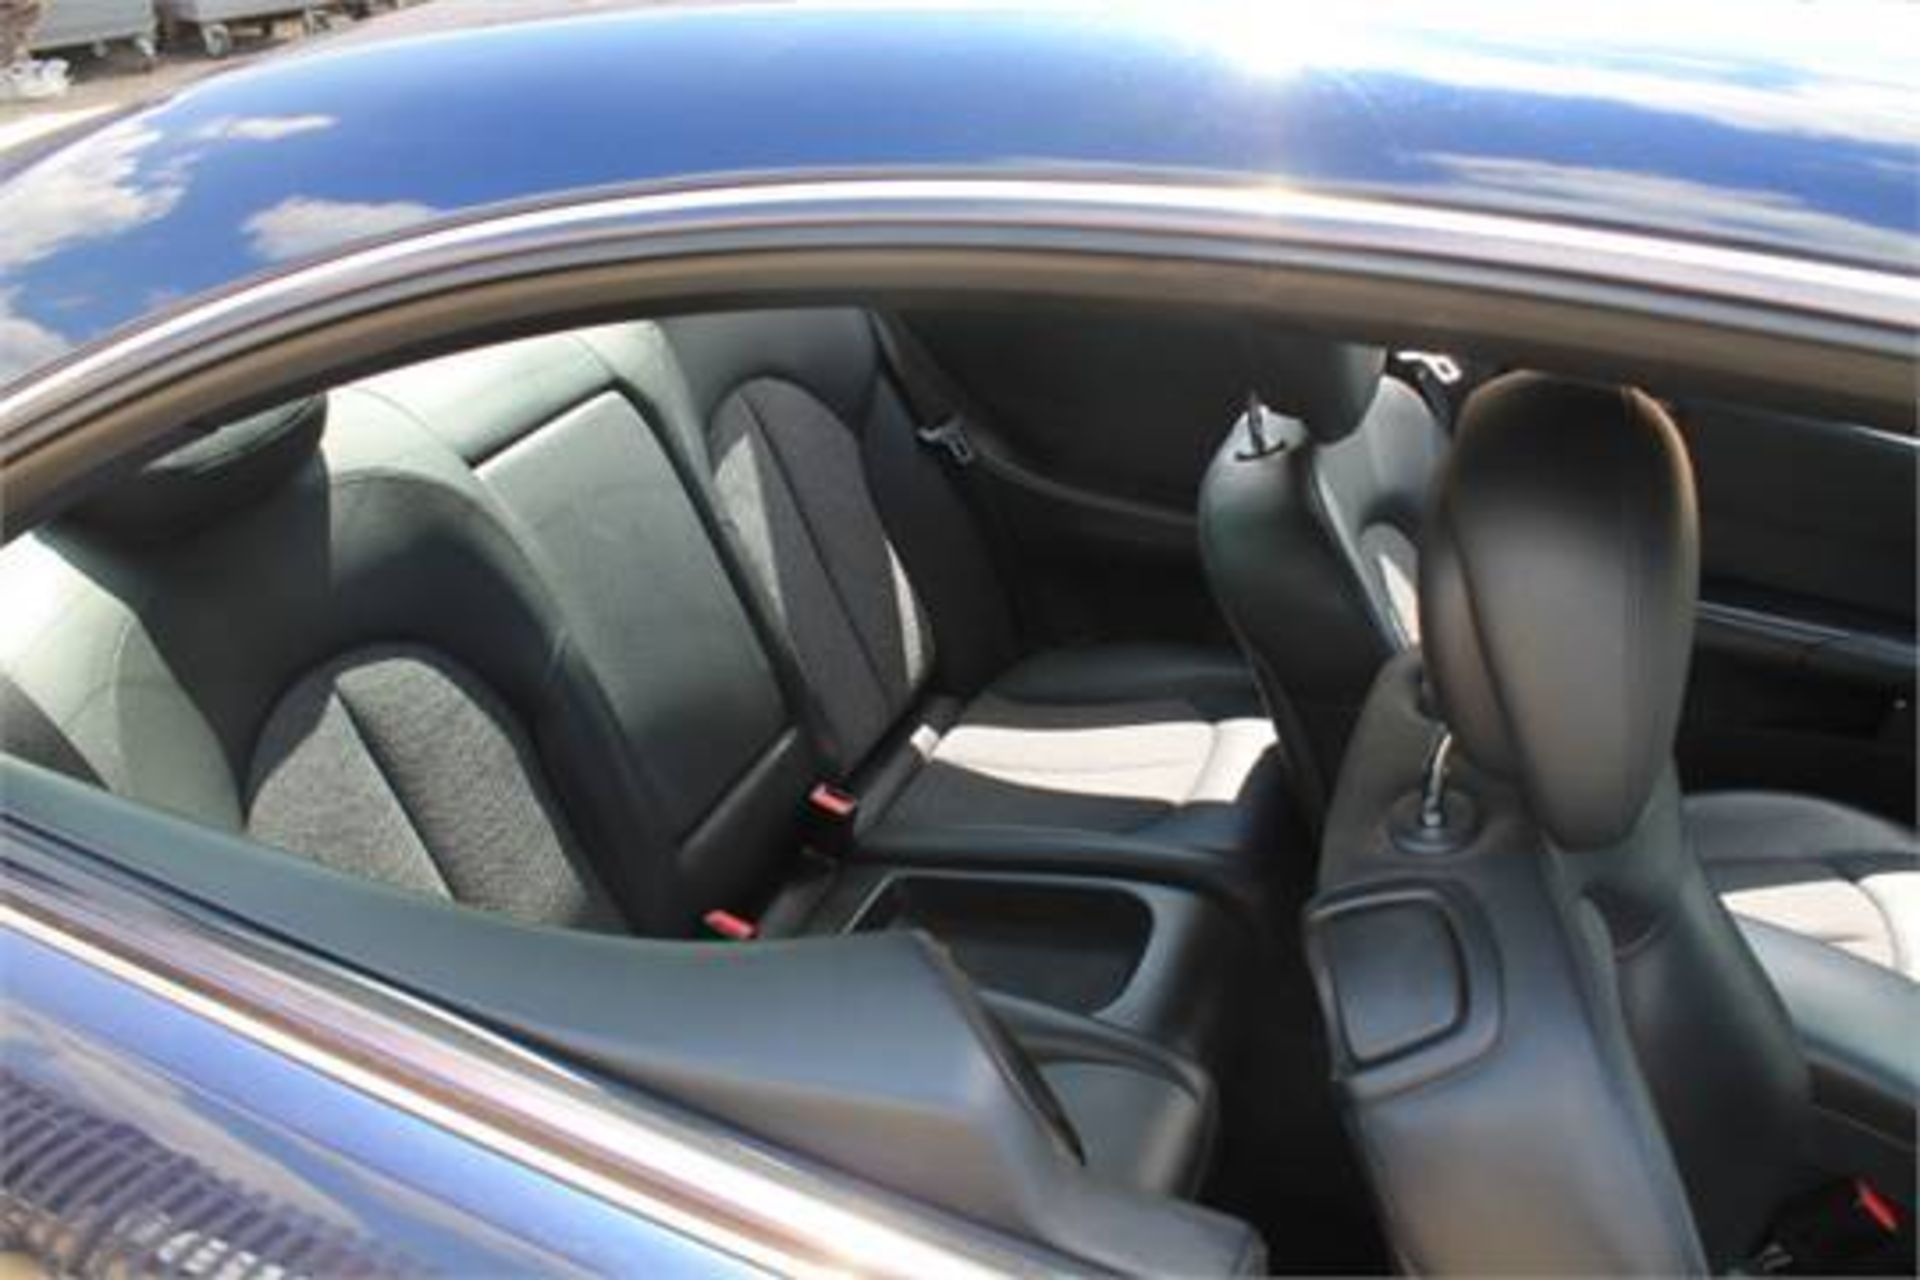 REG: WD55 DHZ 2005 Blue Mercedes CLK220 CDI Avantgarde Coupe 6 Speed Manual Deisel - Mileage: 178408 - Image 8 of 8